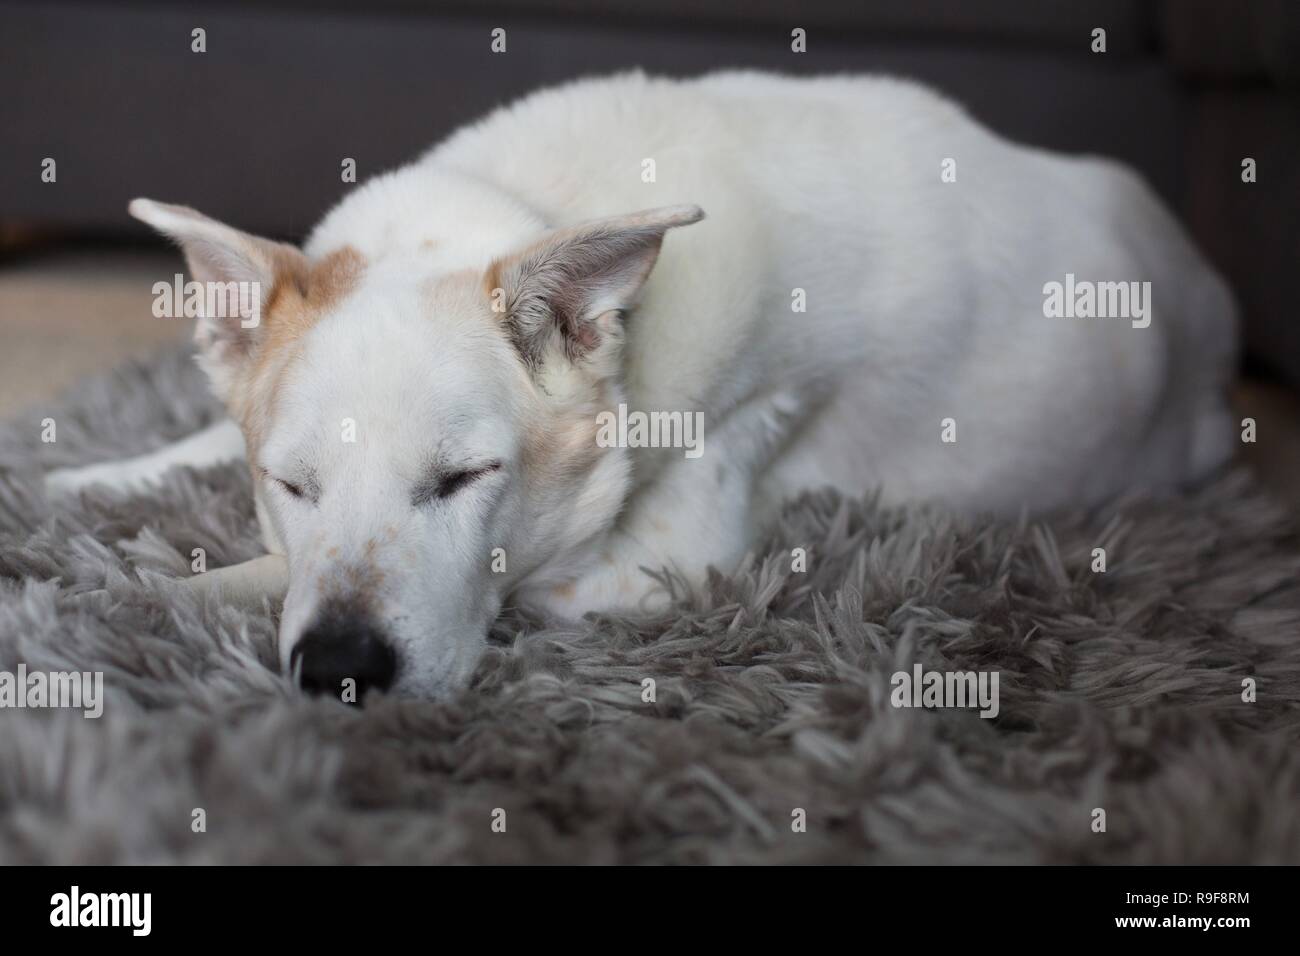 A dog lying on a furry rug asleep. Stock Photo